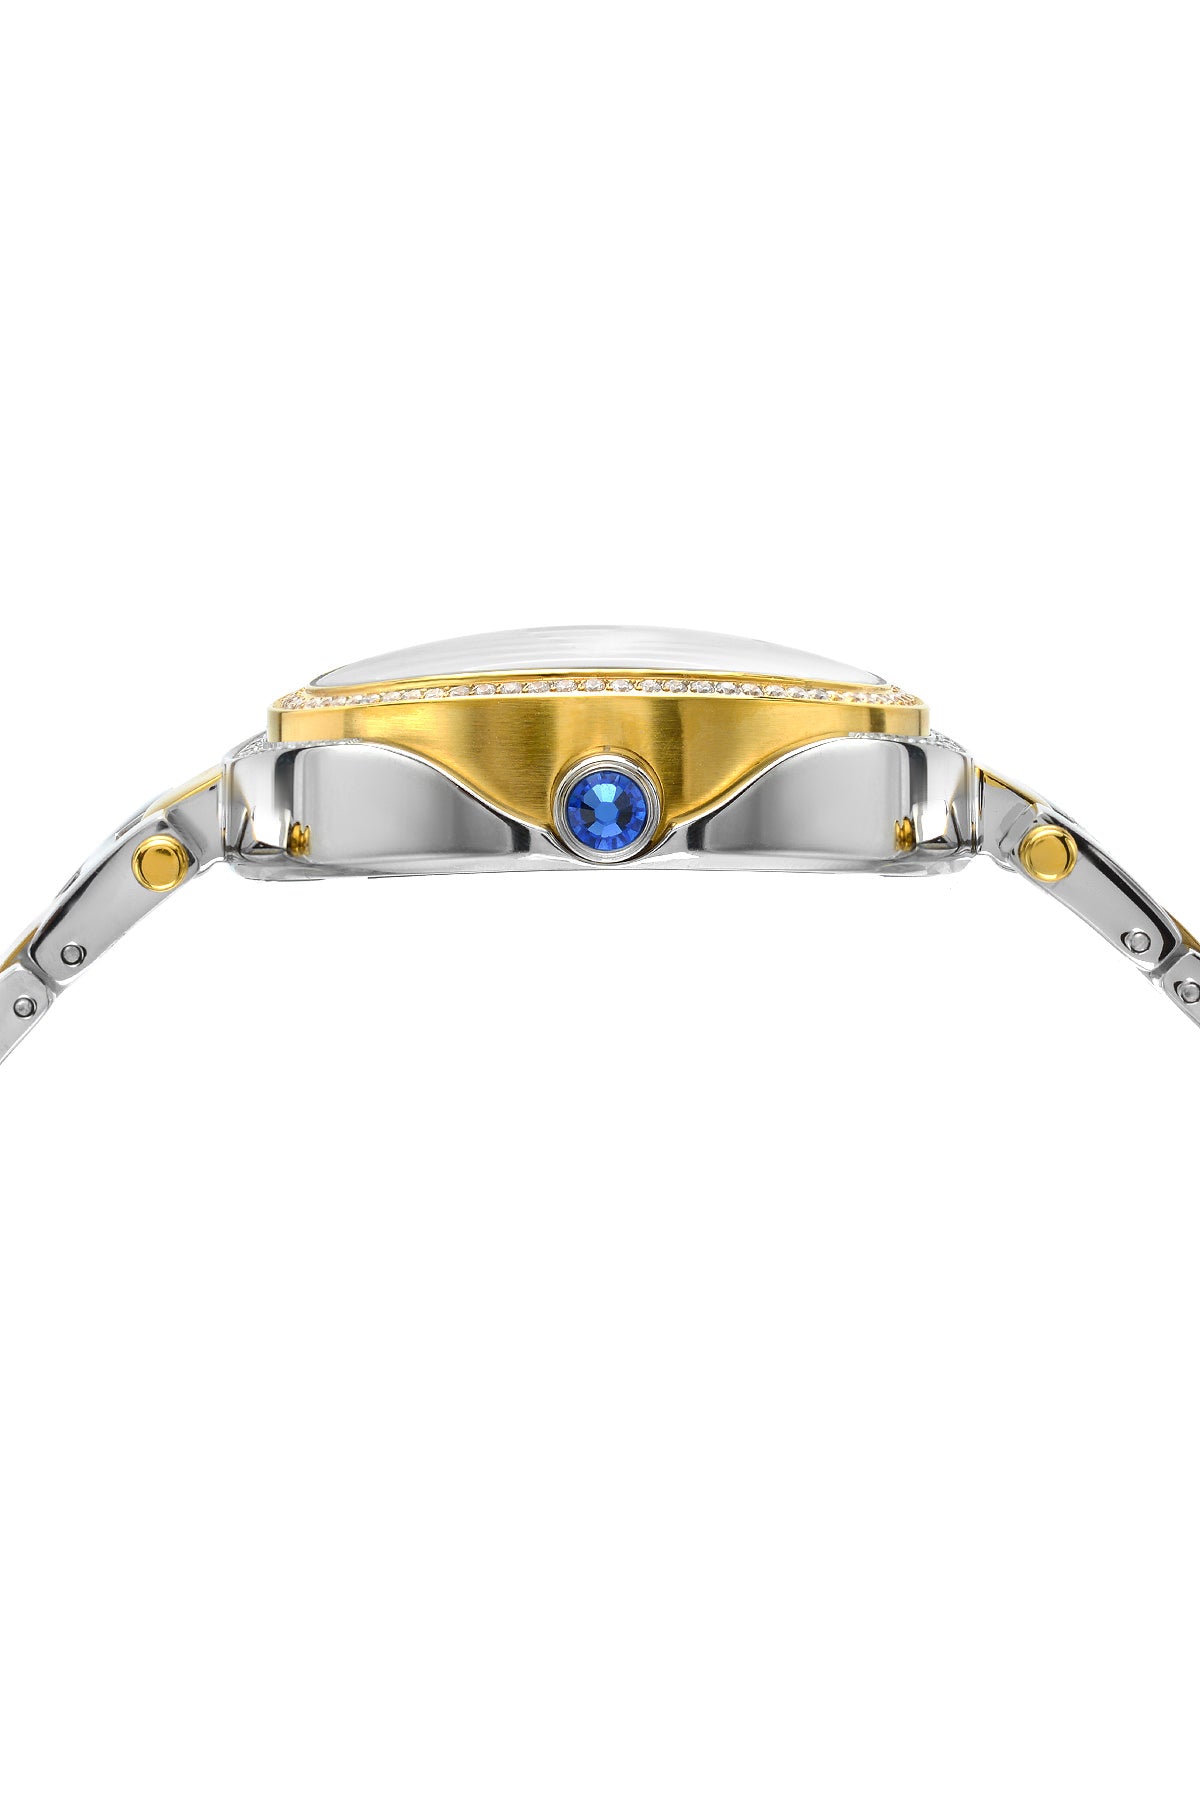 Porsamo Bleu South Sea Crystal Luxury Women's Stainless Steel Watch, Silver, Gold 104FSSC